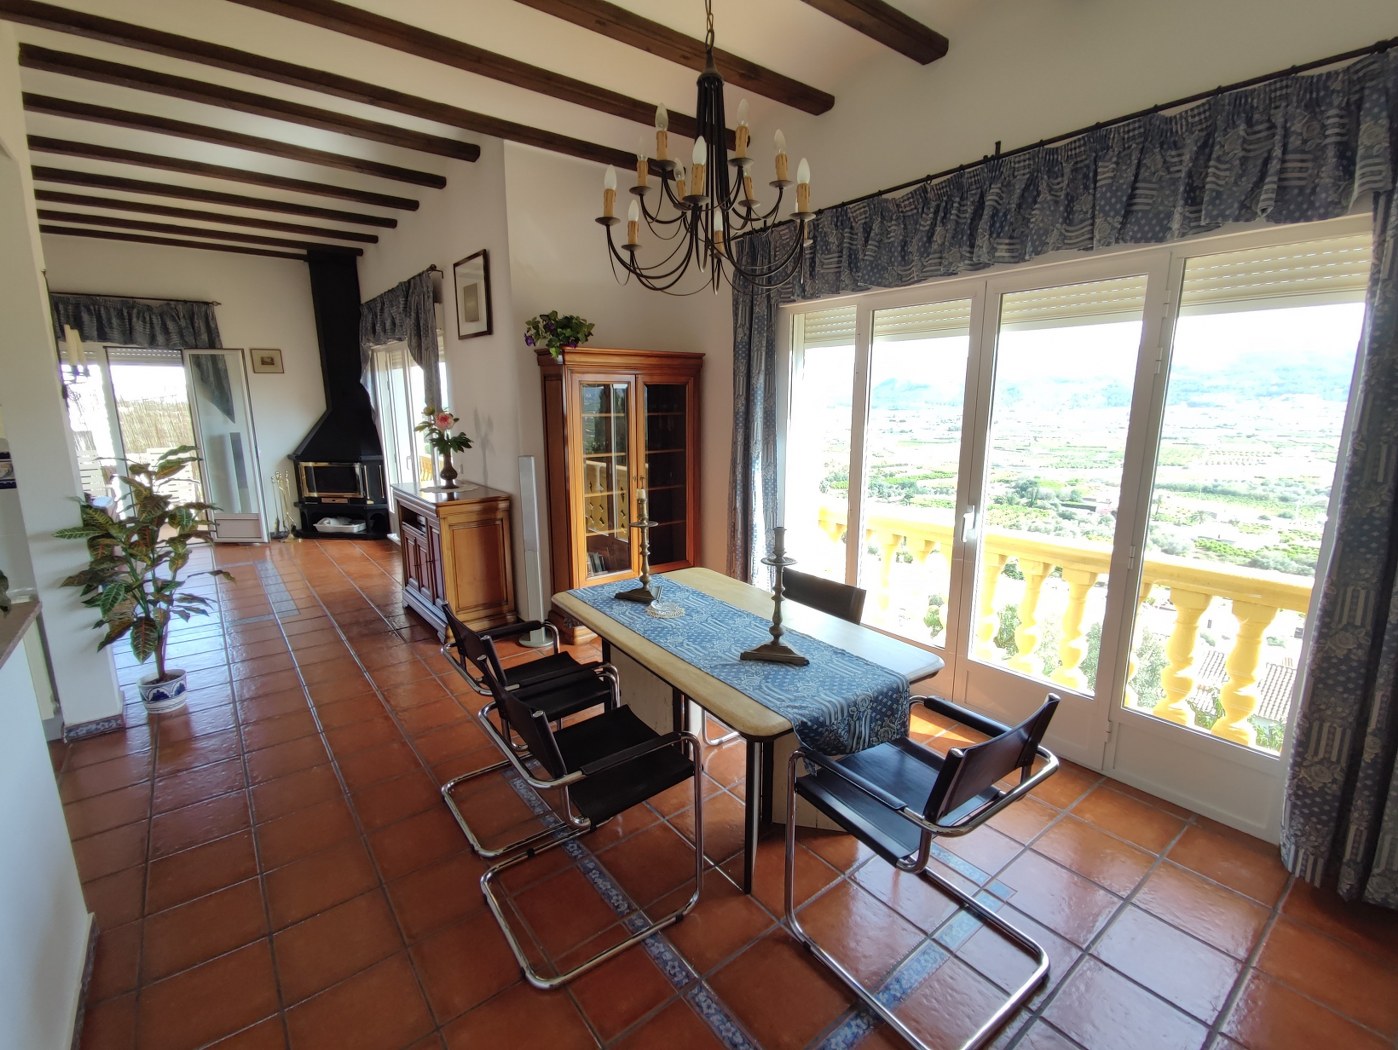 Villa with beautiful views, 2 bedrooms, Sanet y Negrals